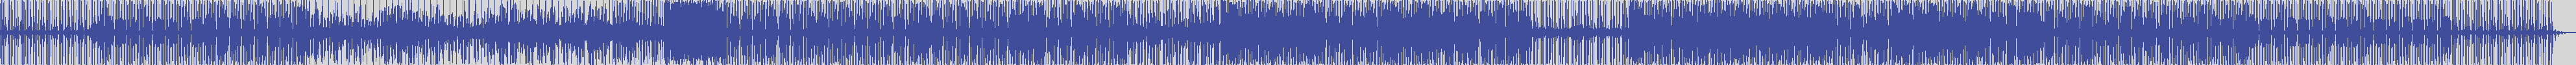 atomic_recordings [AR001] Felix - Third Eye [Front Mix One] audio wave form